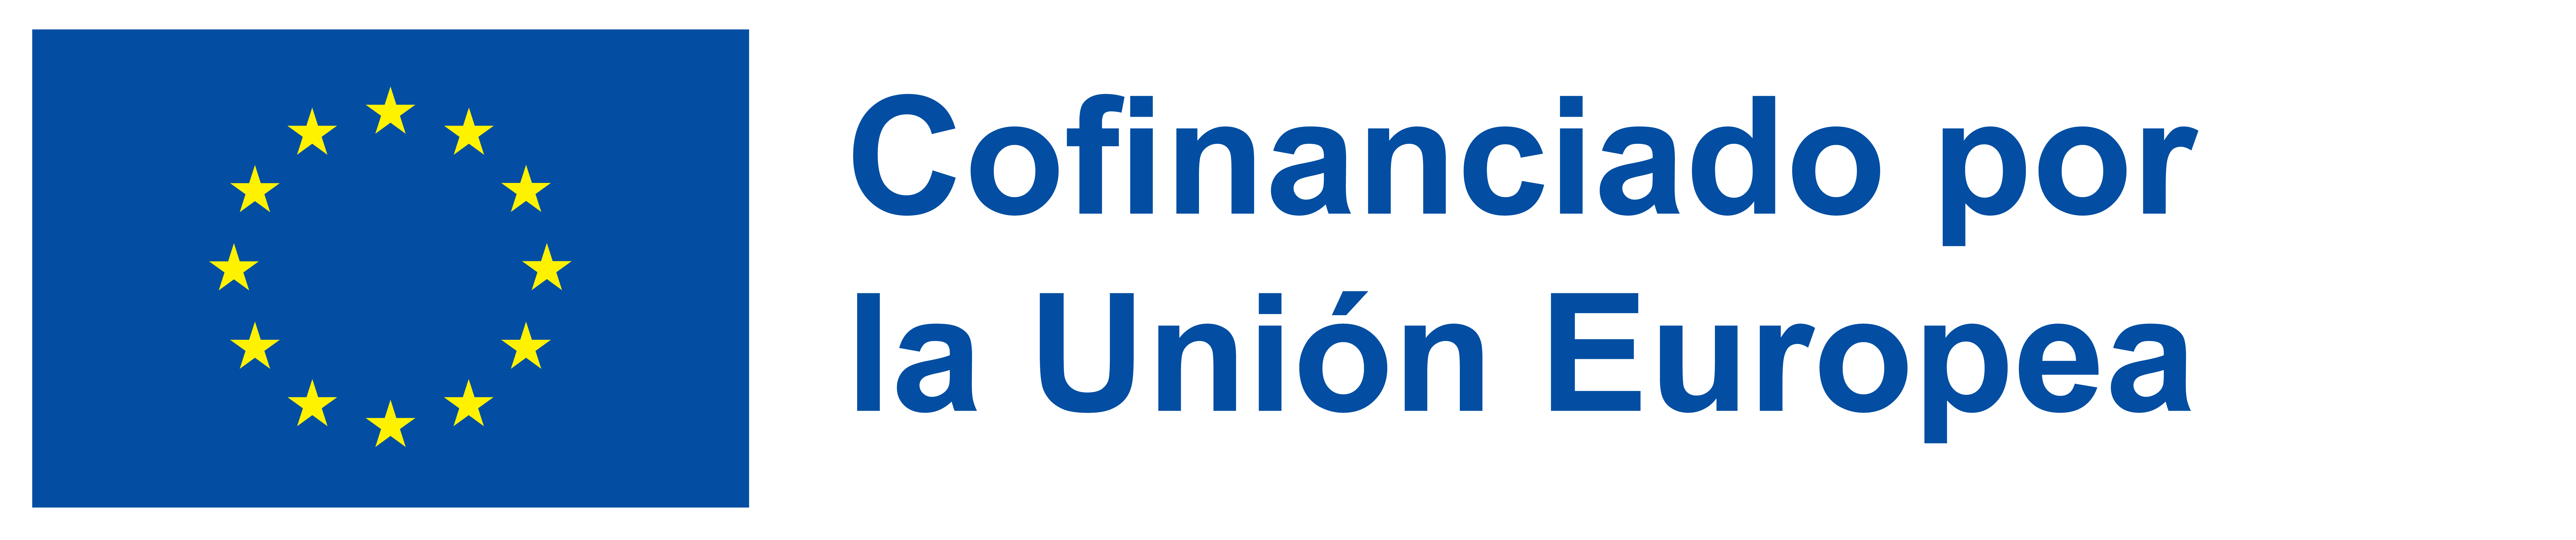 Cofinanciado-por-la-Union-Europea_INFODEF